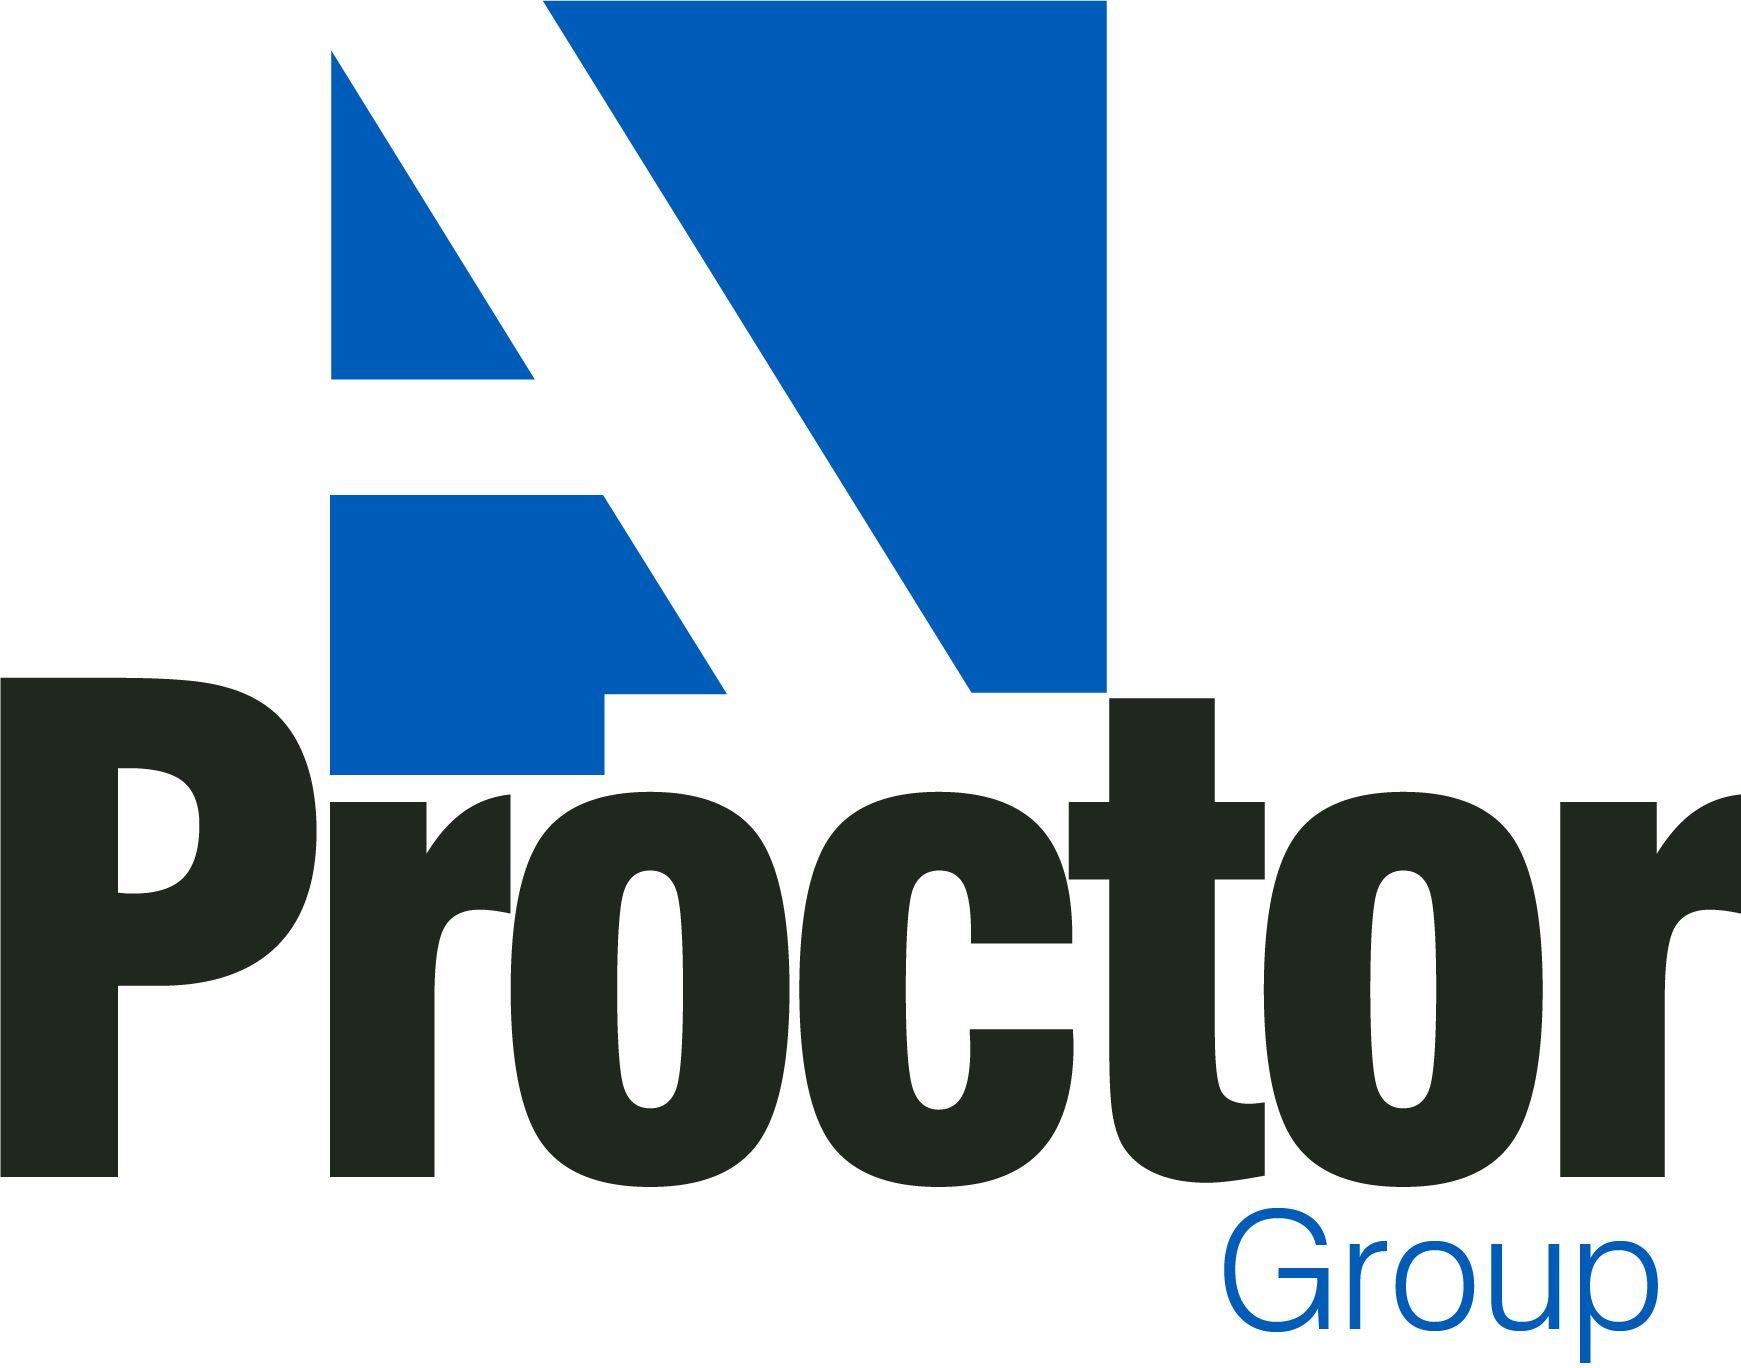 Proctor Logo - A. Proctor Group Ltd – MCRMA